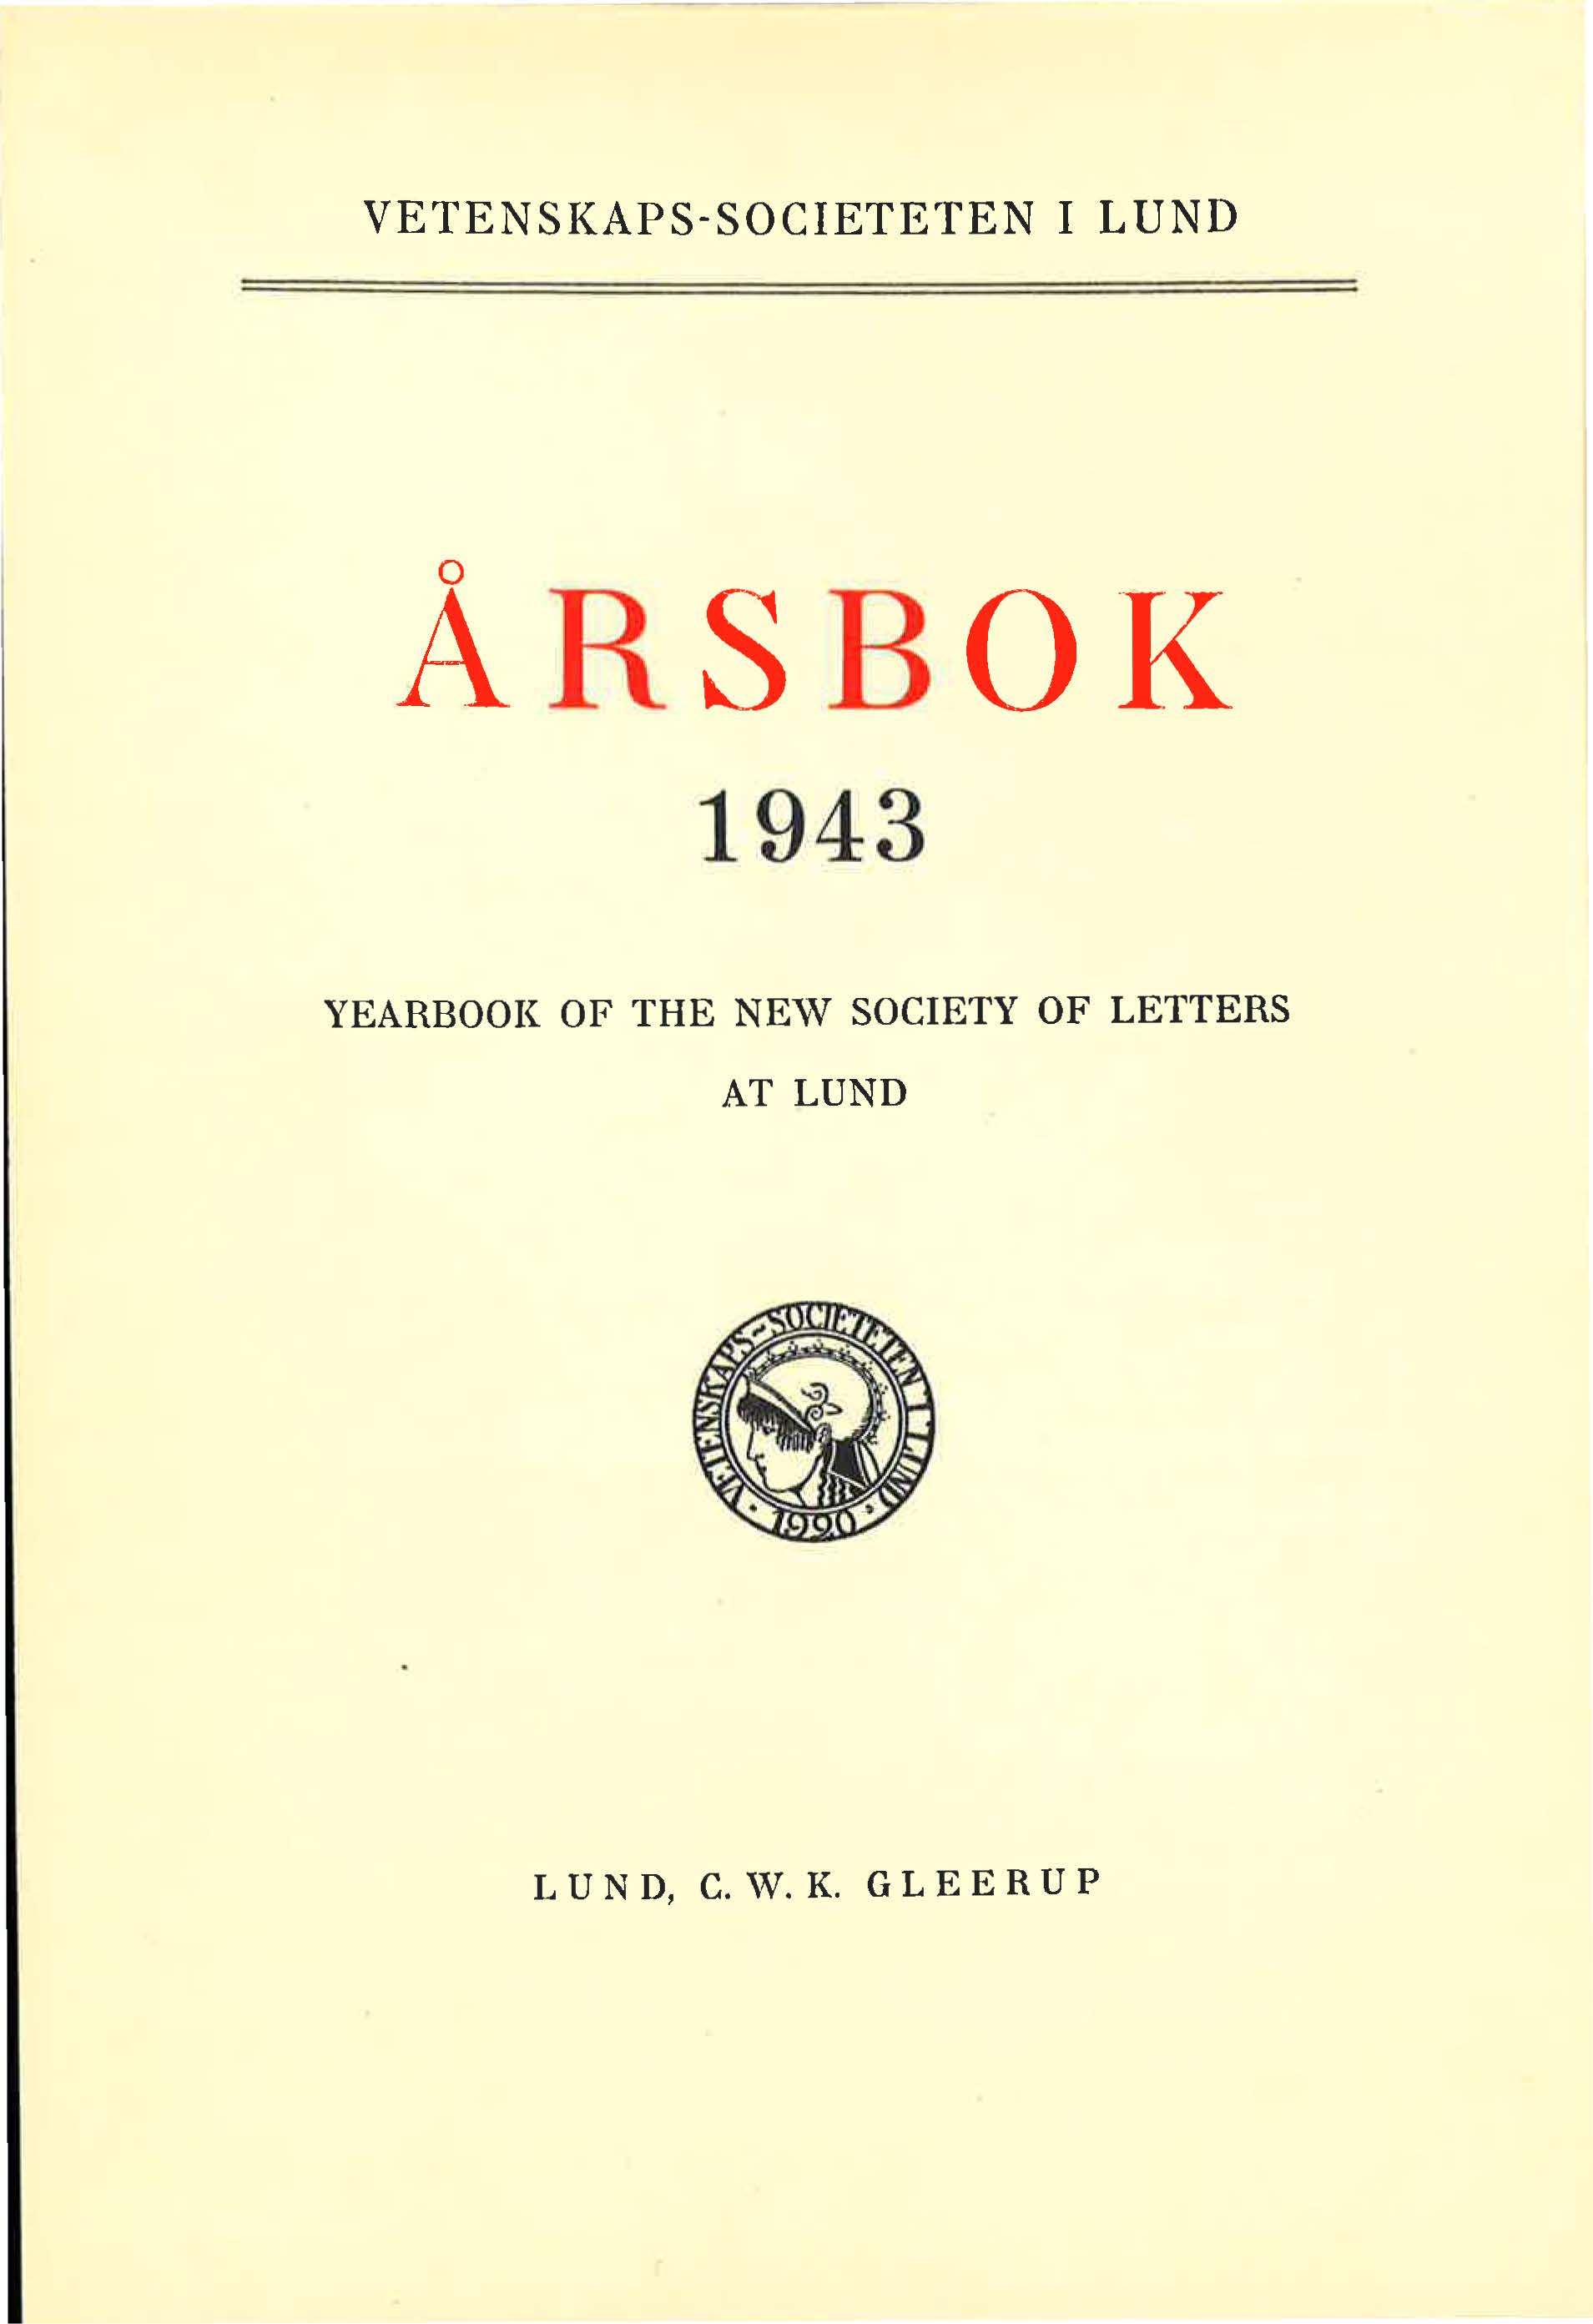 					Visa Årsbok 1943
				